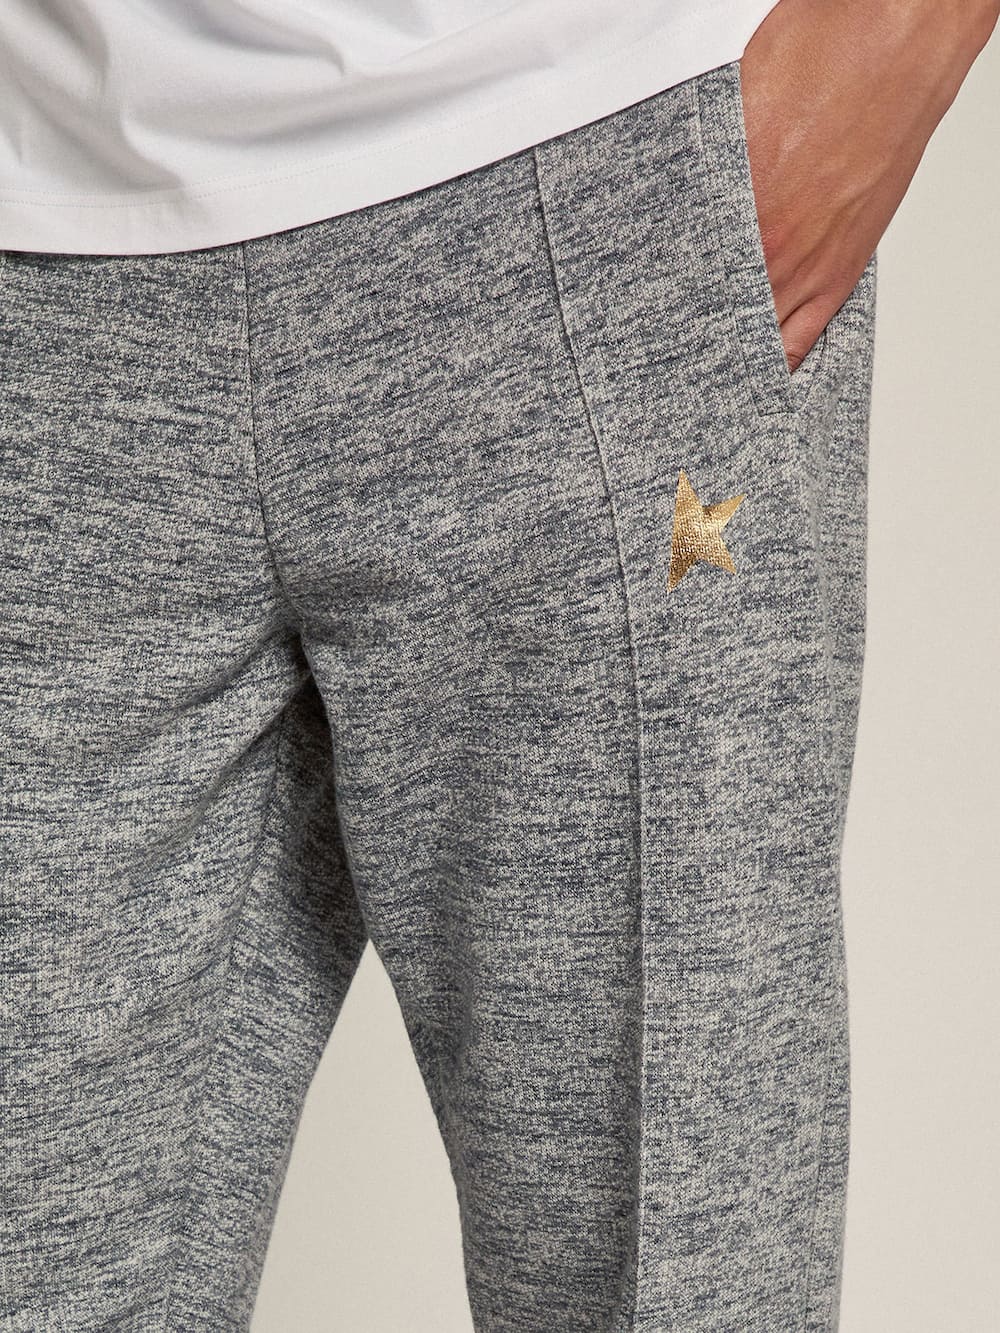 Golden Goose - Calça de jogging masculina cinza com estrela dourada na frente in 